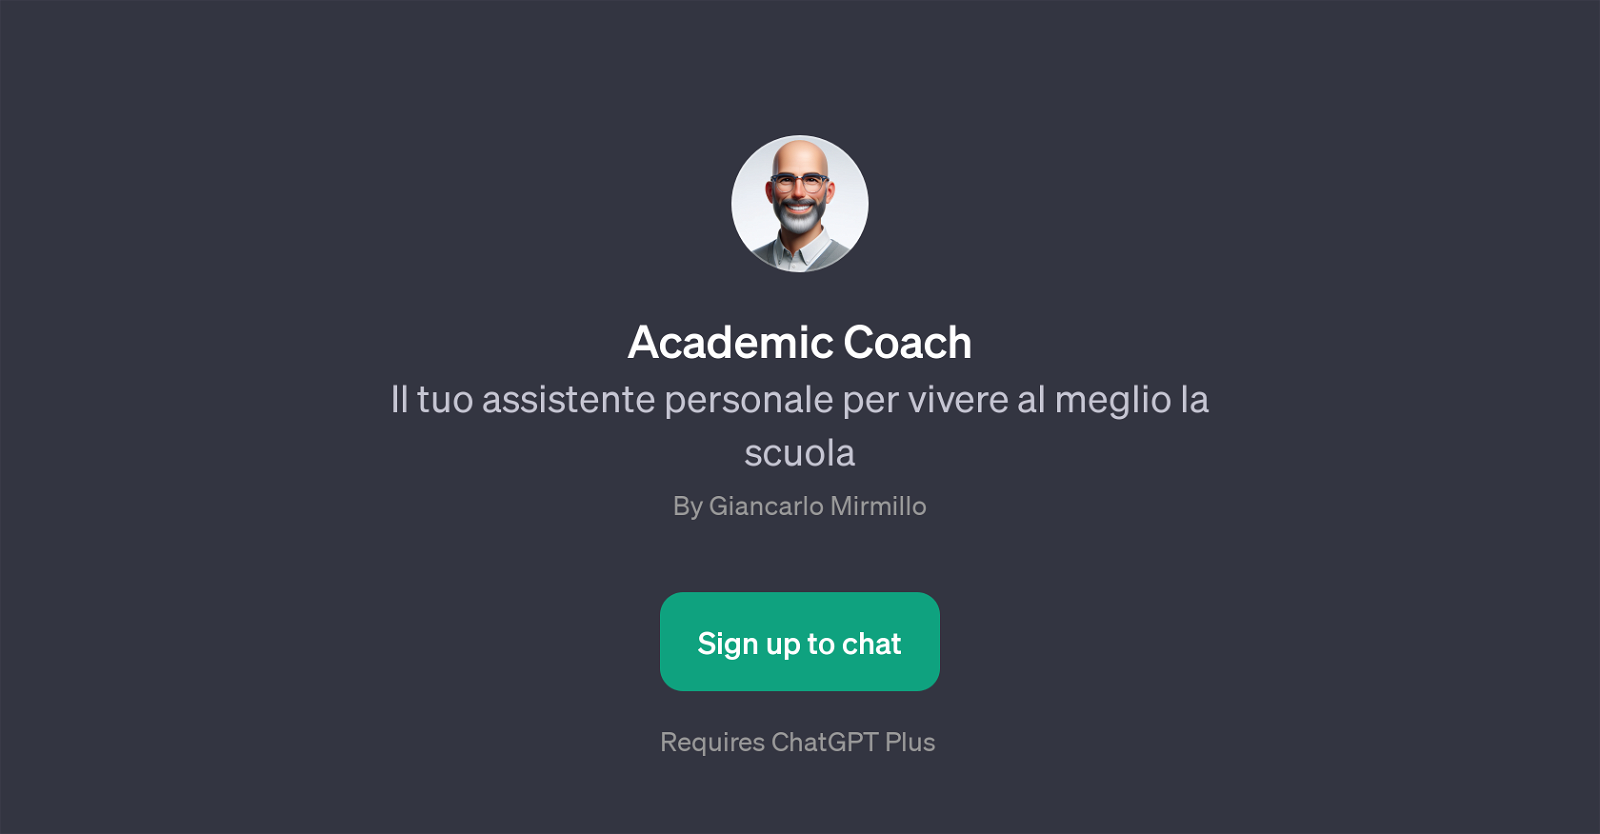 Academic Coach website